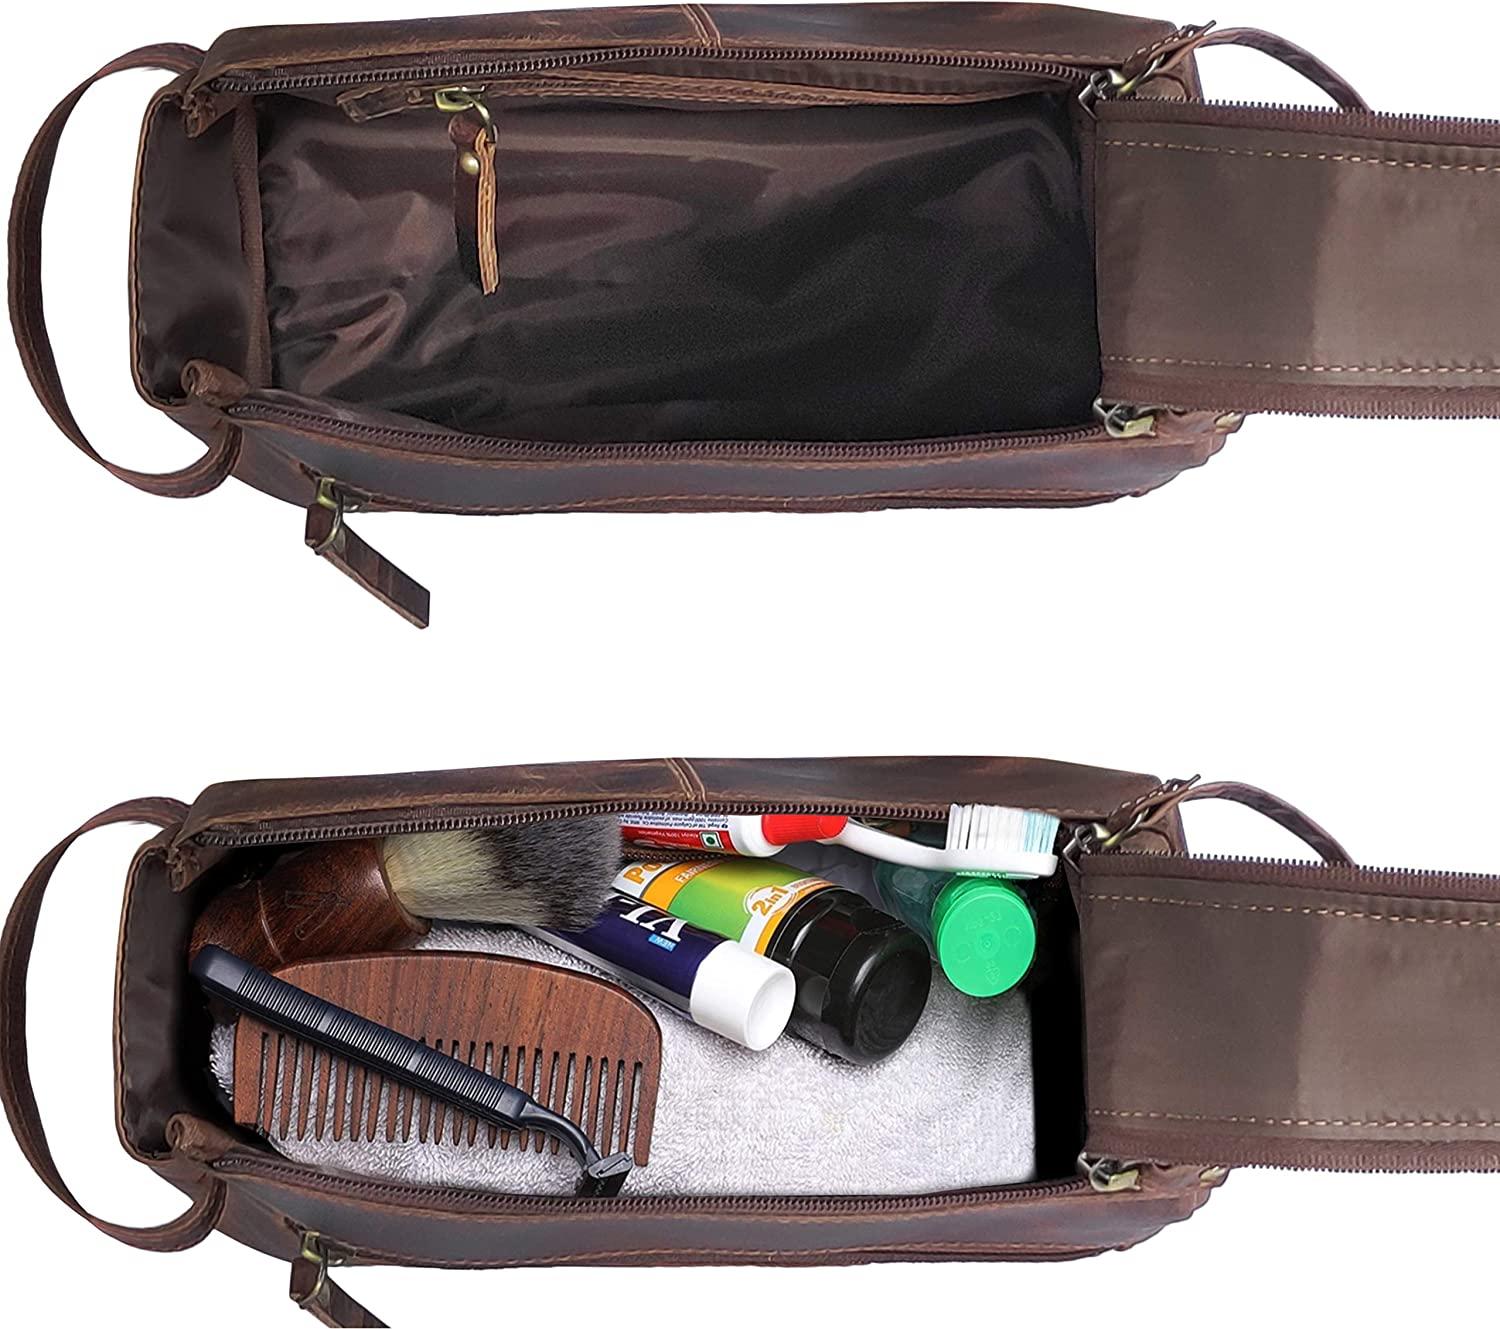 Rustic Town Genuine Leather Travel Toiletry Bag - Dopp Kit Organizer (Brown)